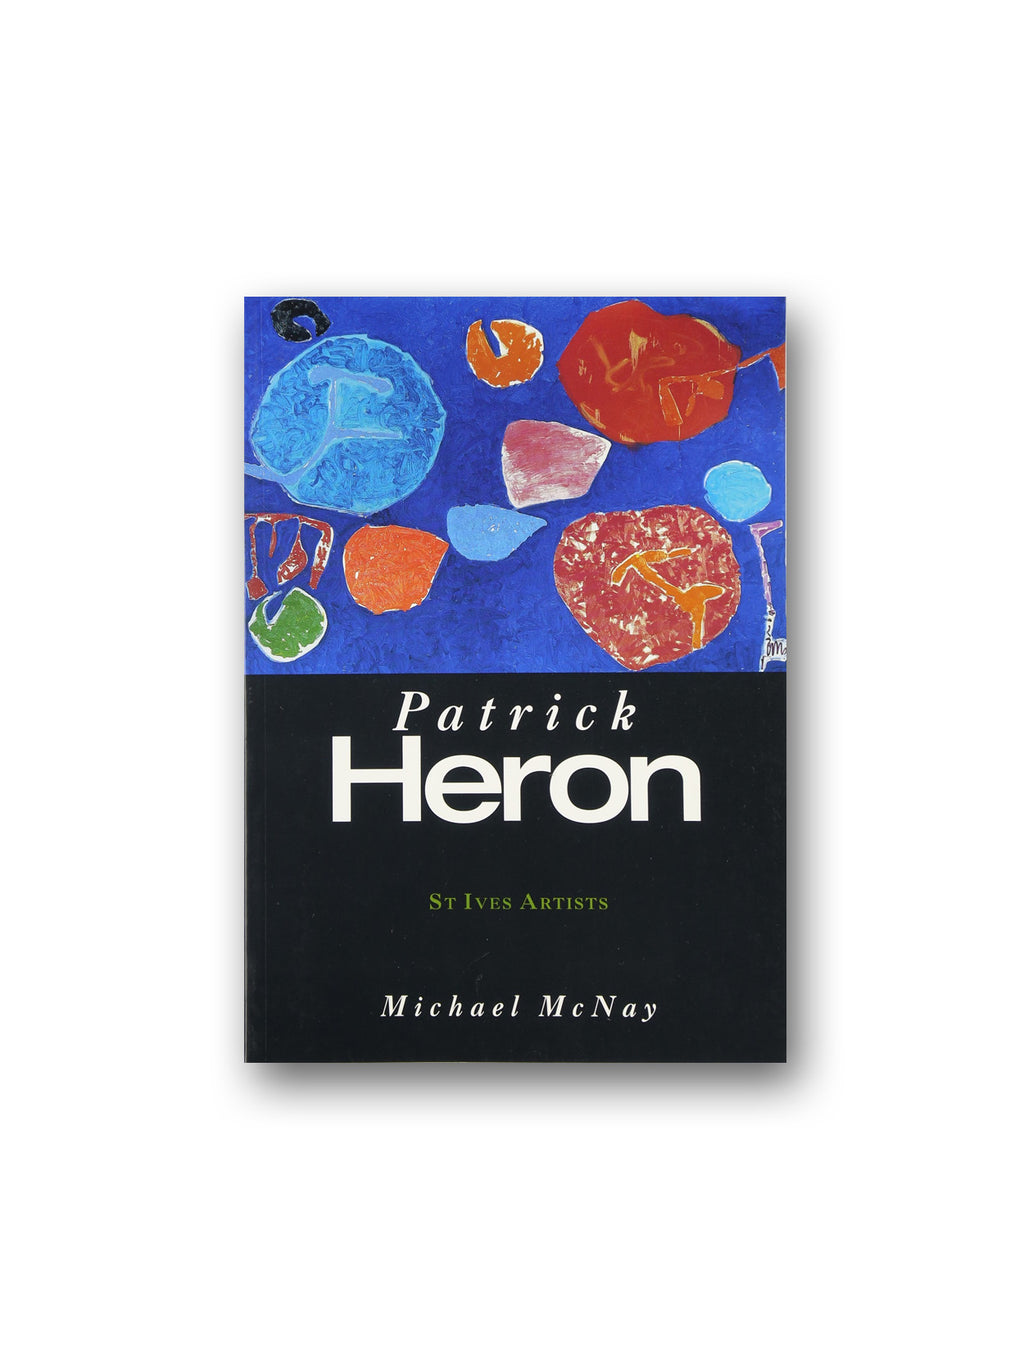 Patrick Heron: St. Ives Artists